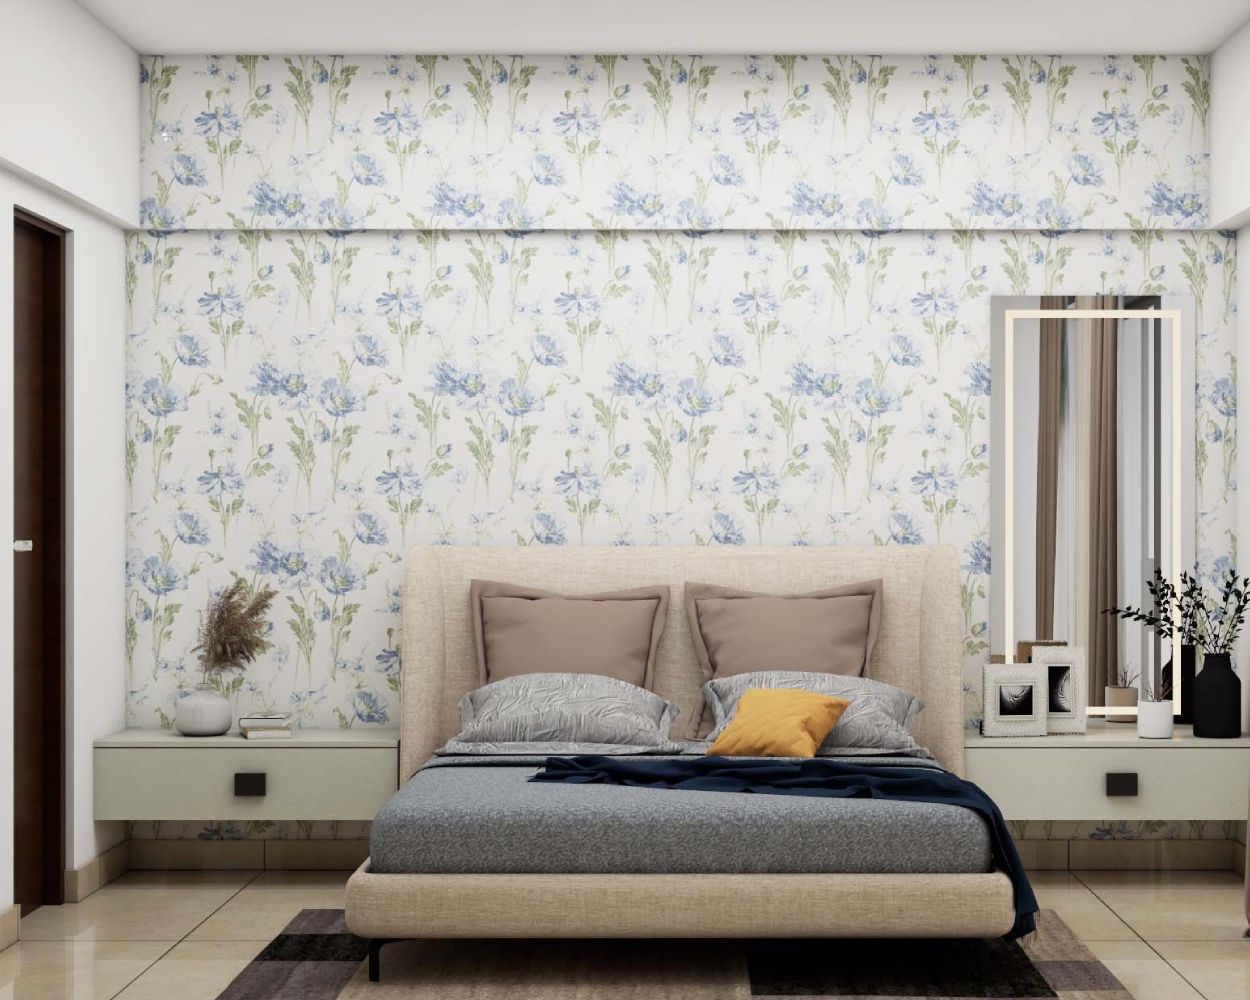 Modern White And Blue Floral Bedroom Wallpaper Design